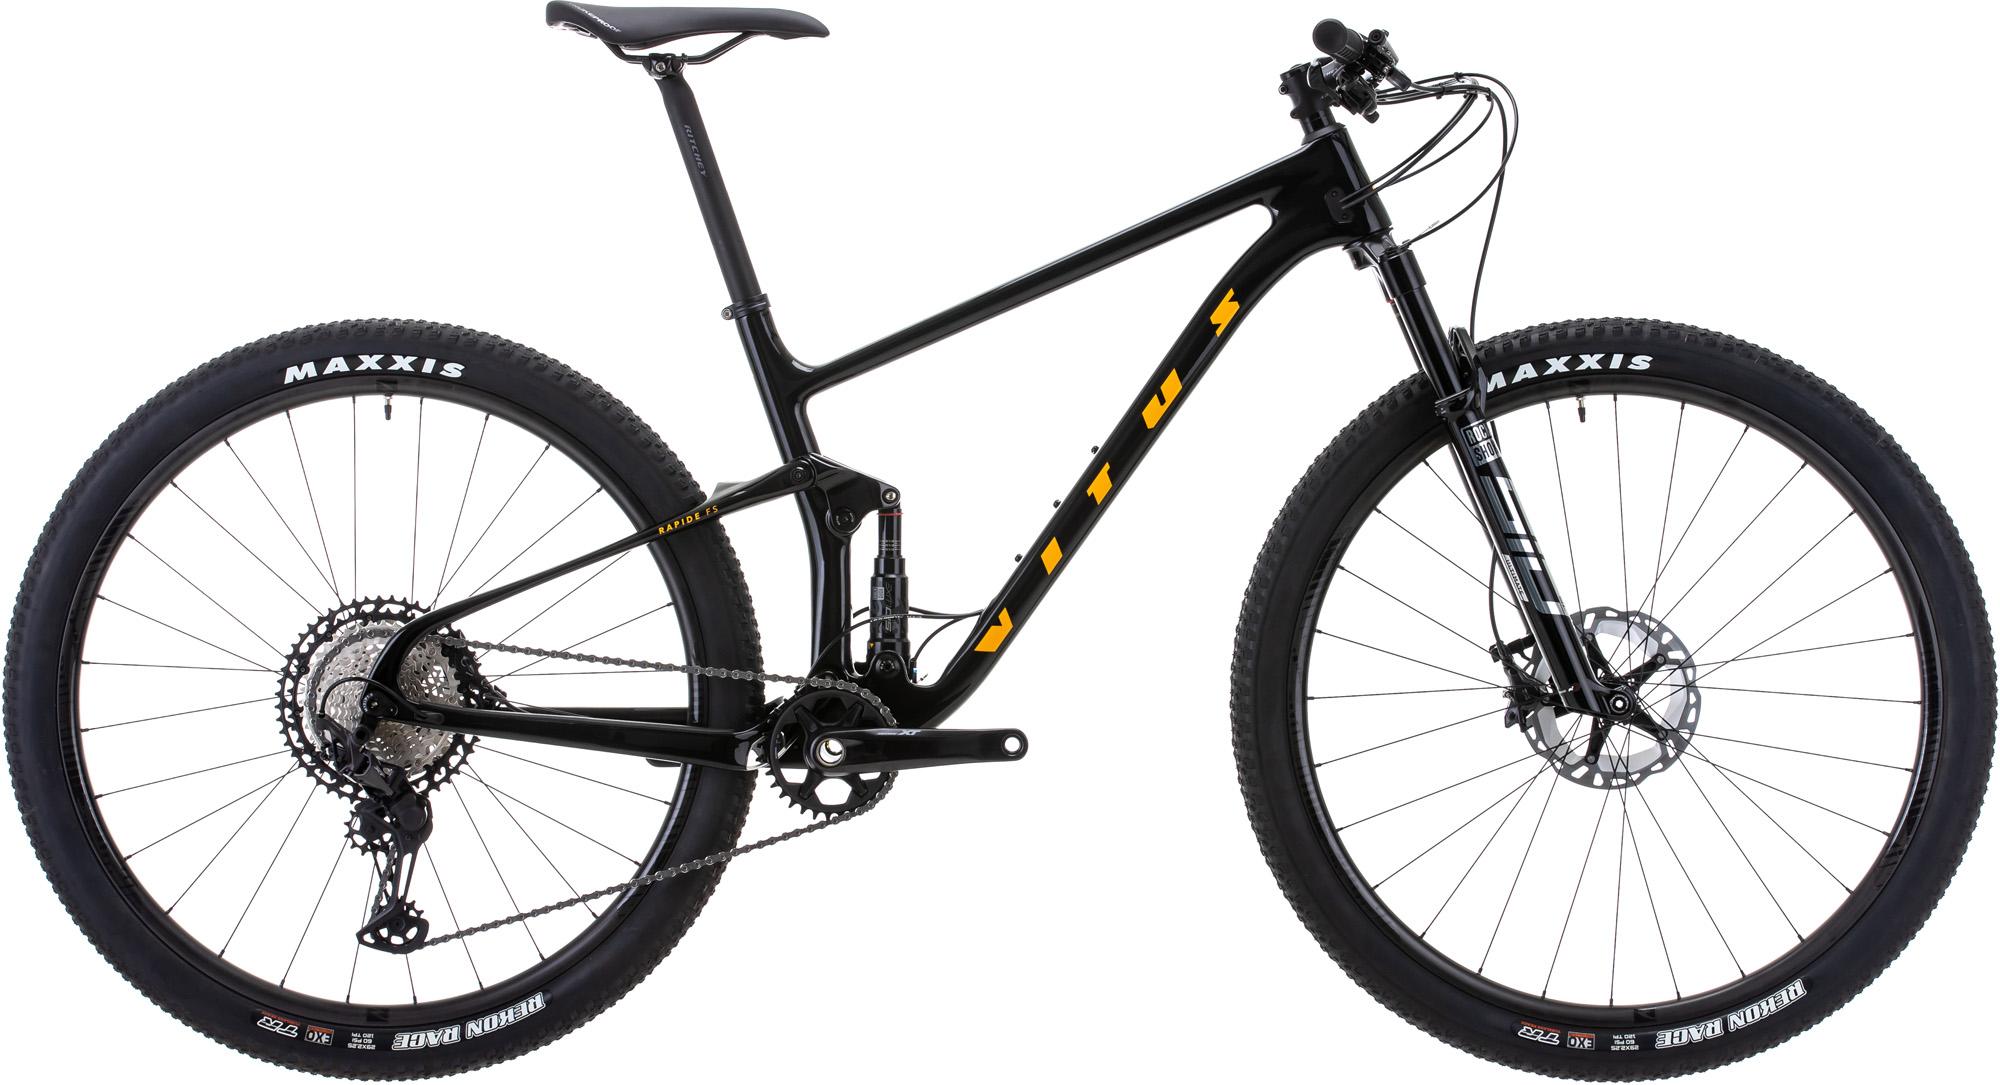 Vitus Rapide Fs Crx Mountain Bike - Black/mango